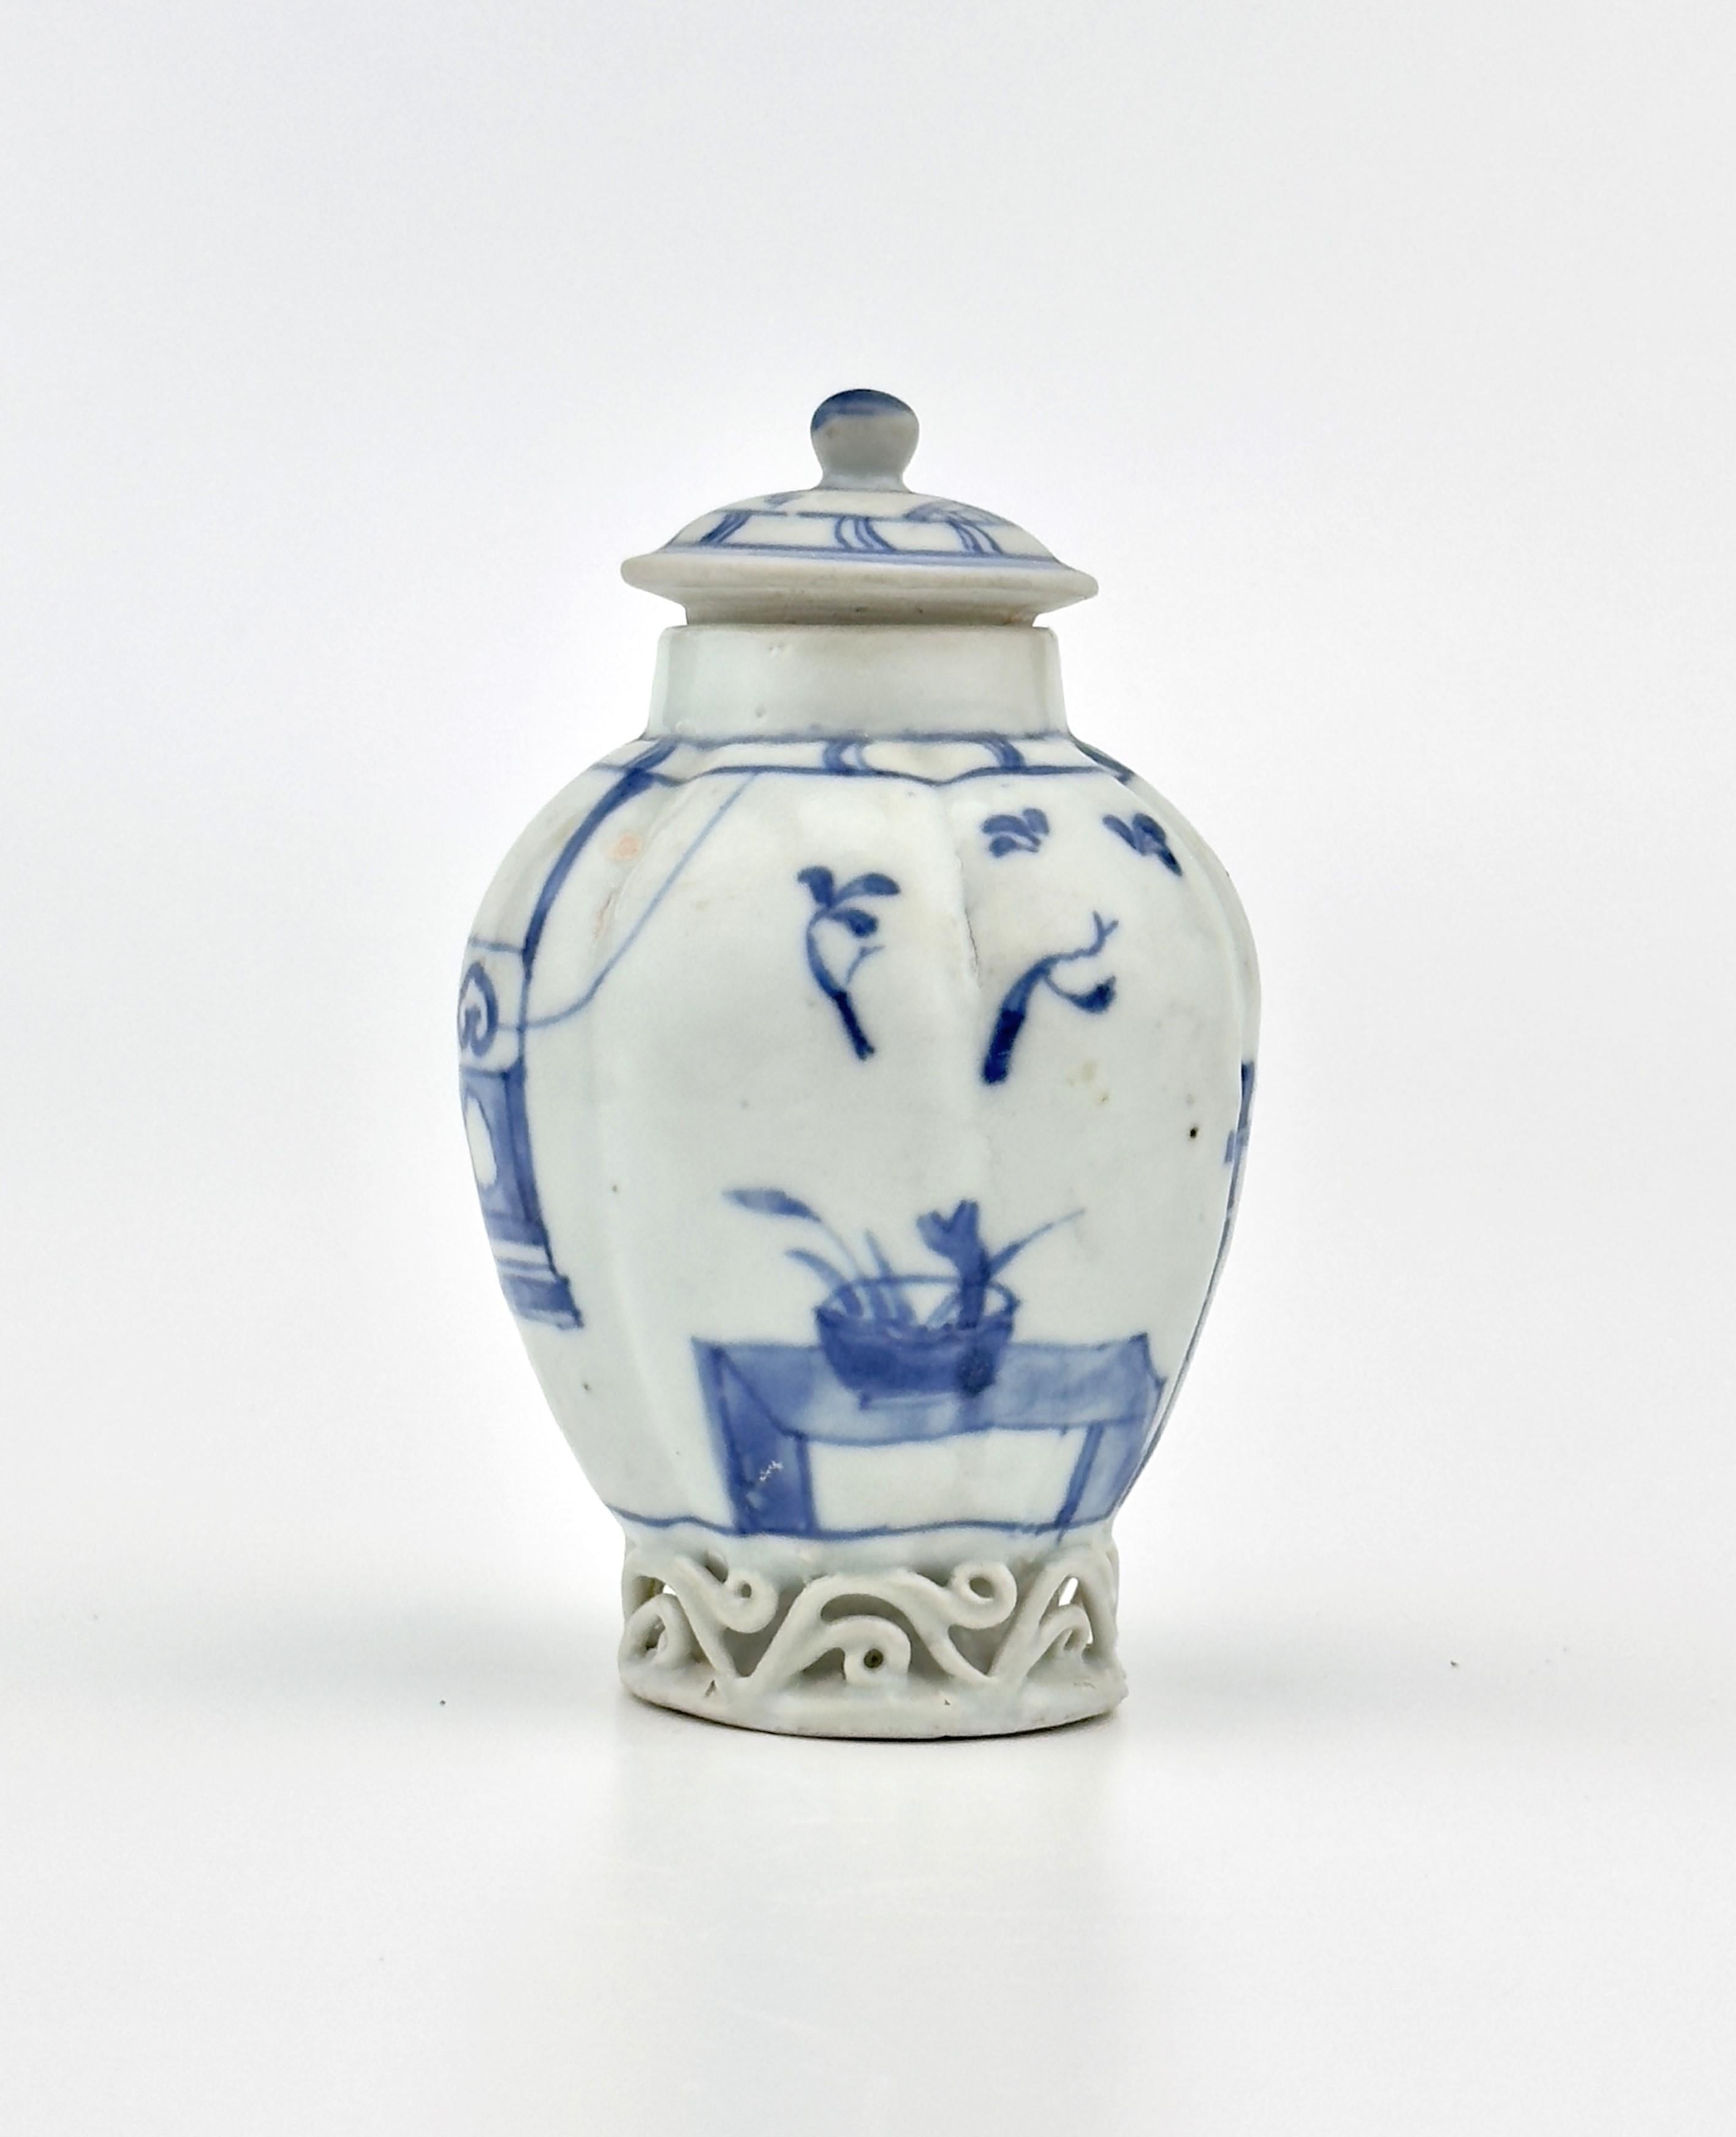 Blaues und weißes Teeservice mit Imari-Pavillon-Muster, ca. 1725, Qing Dynasty, Yongzheng Re im Angebot 1